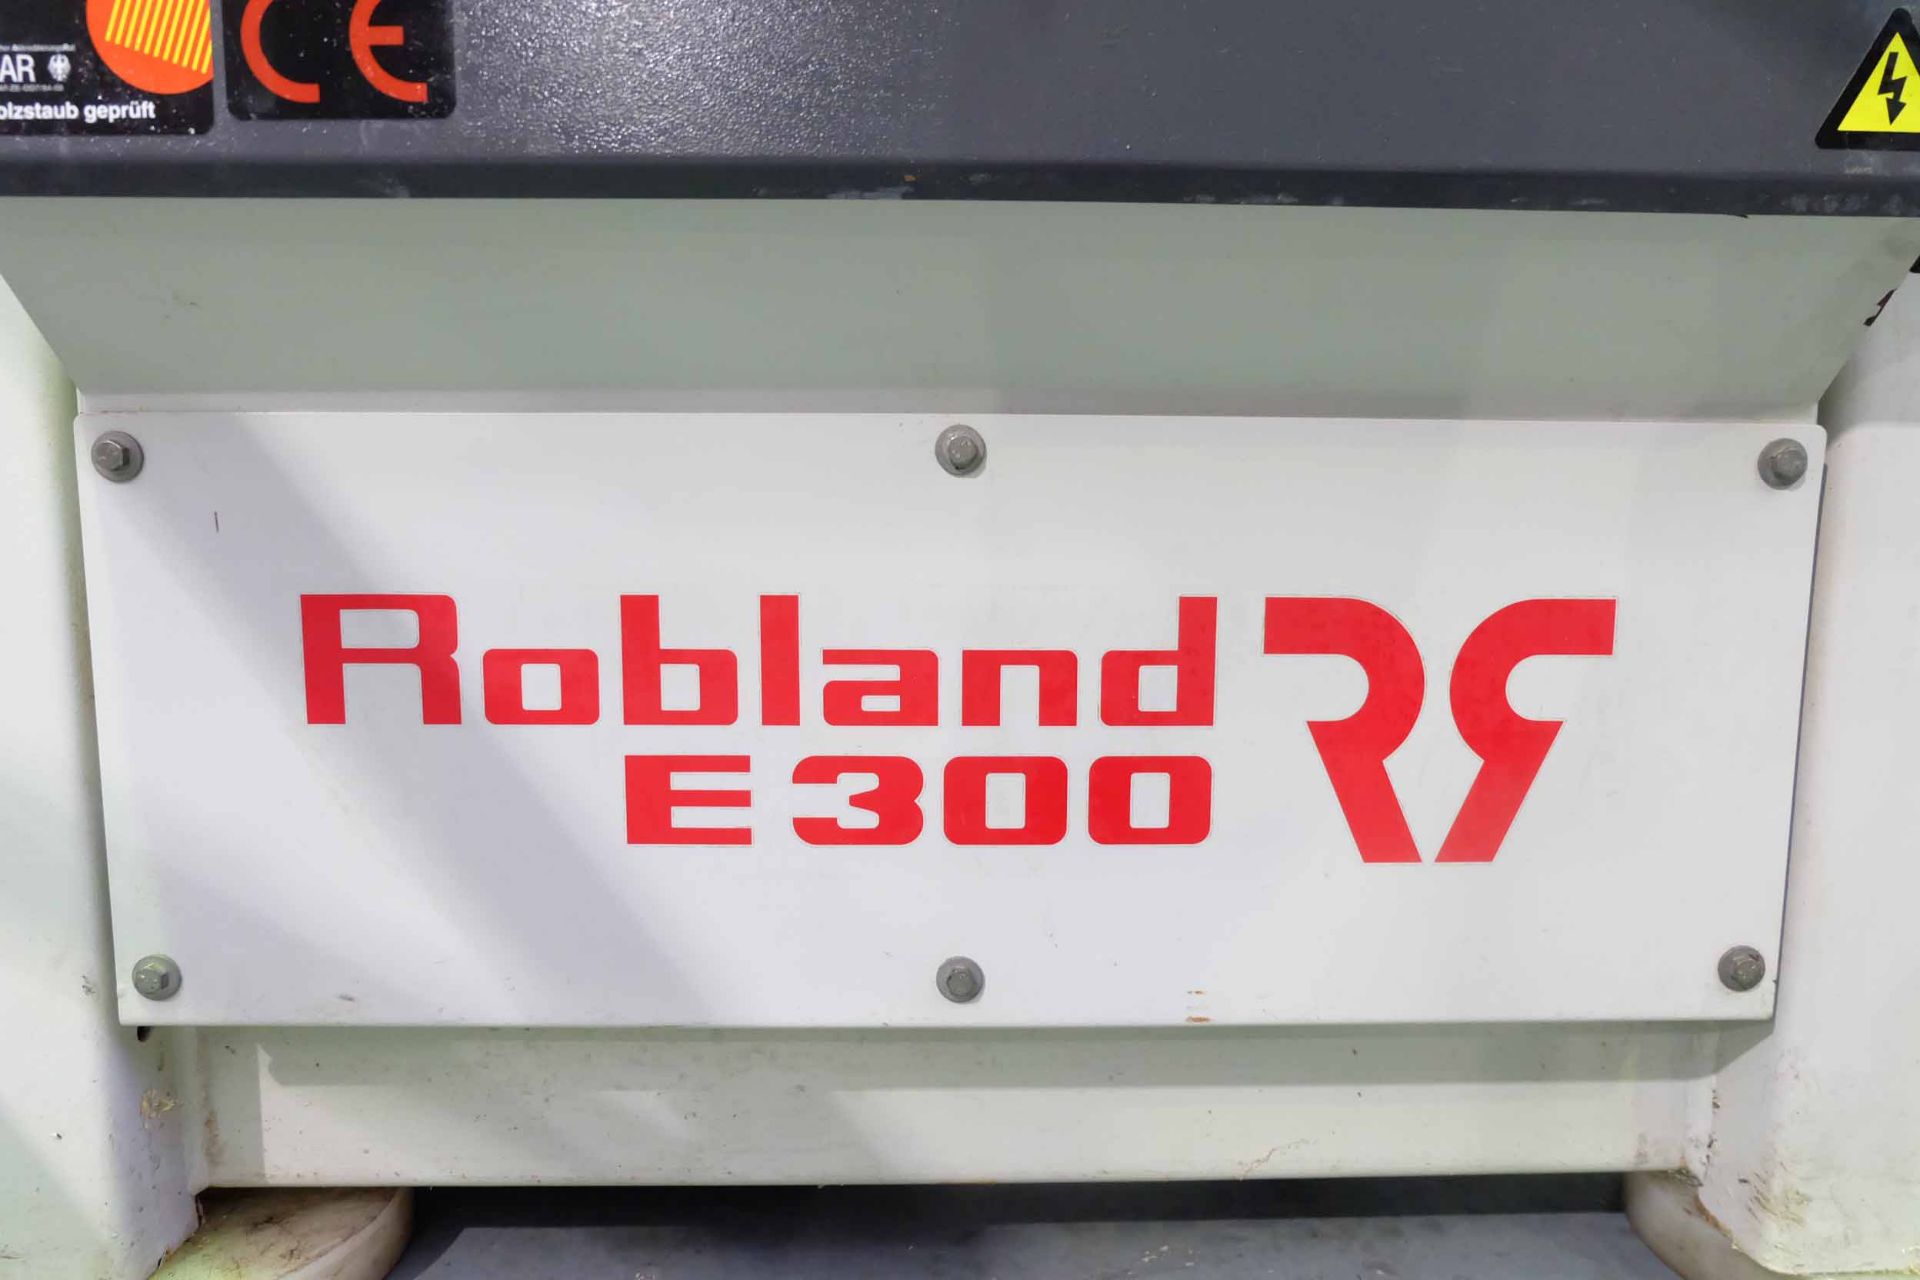 Robland E300 Board Saw. Min Blade Diameter 250mm. Max Blade Diameter 300mm. Capacity 1700mm x 2500mm - Image 13 of 21